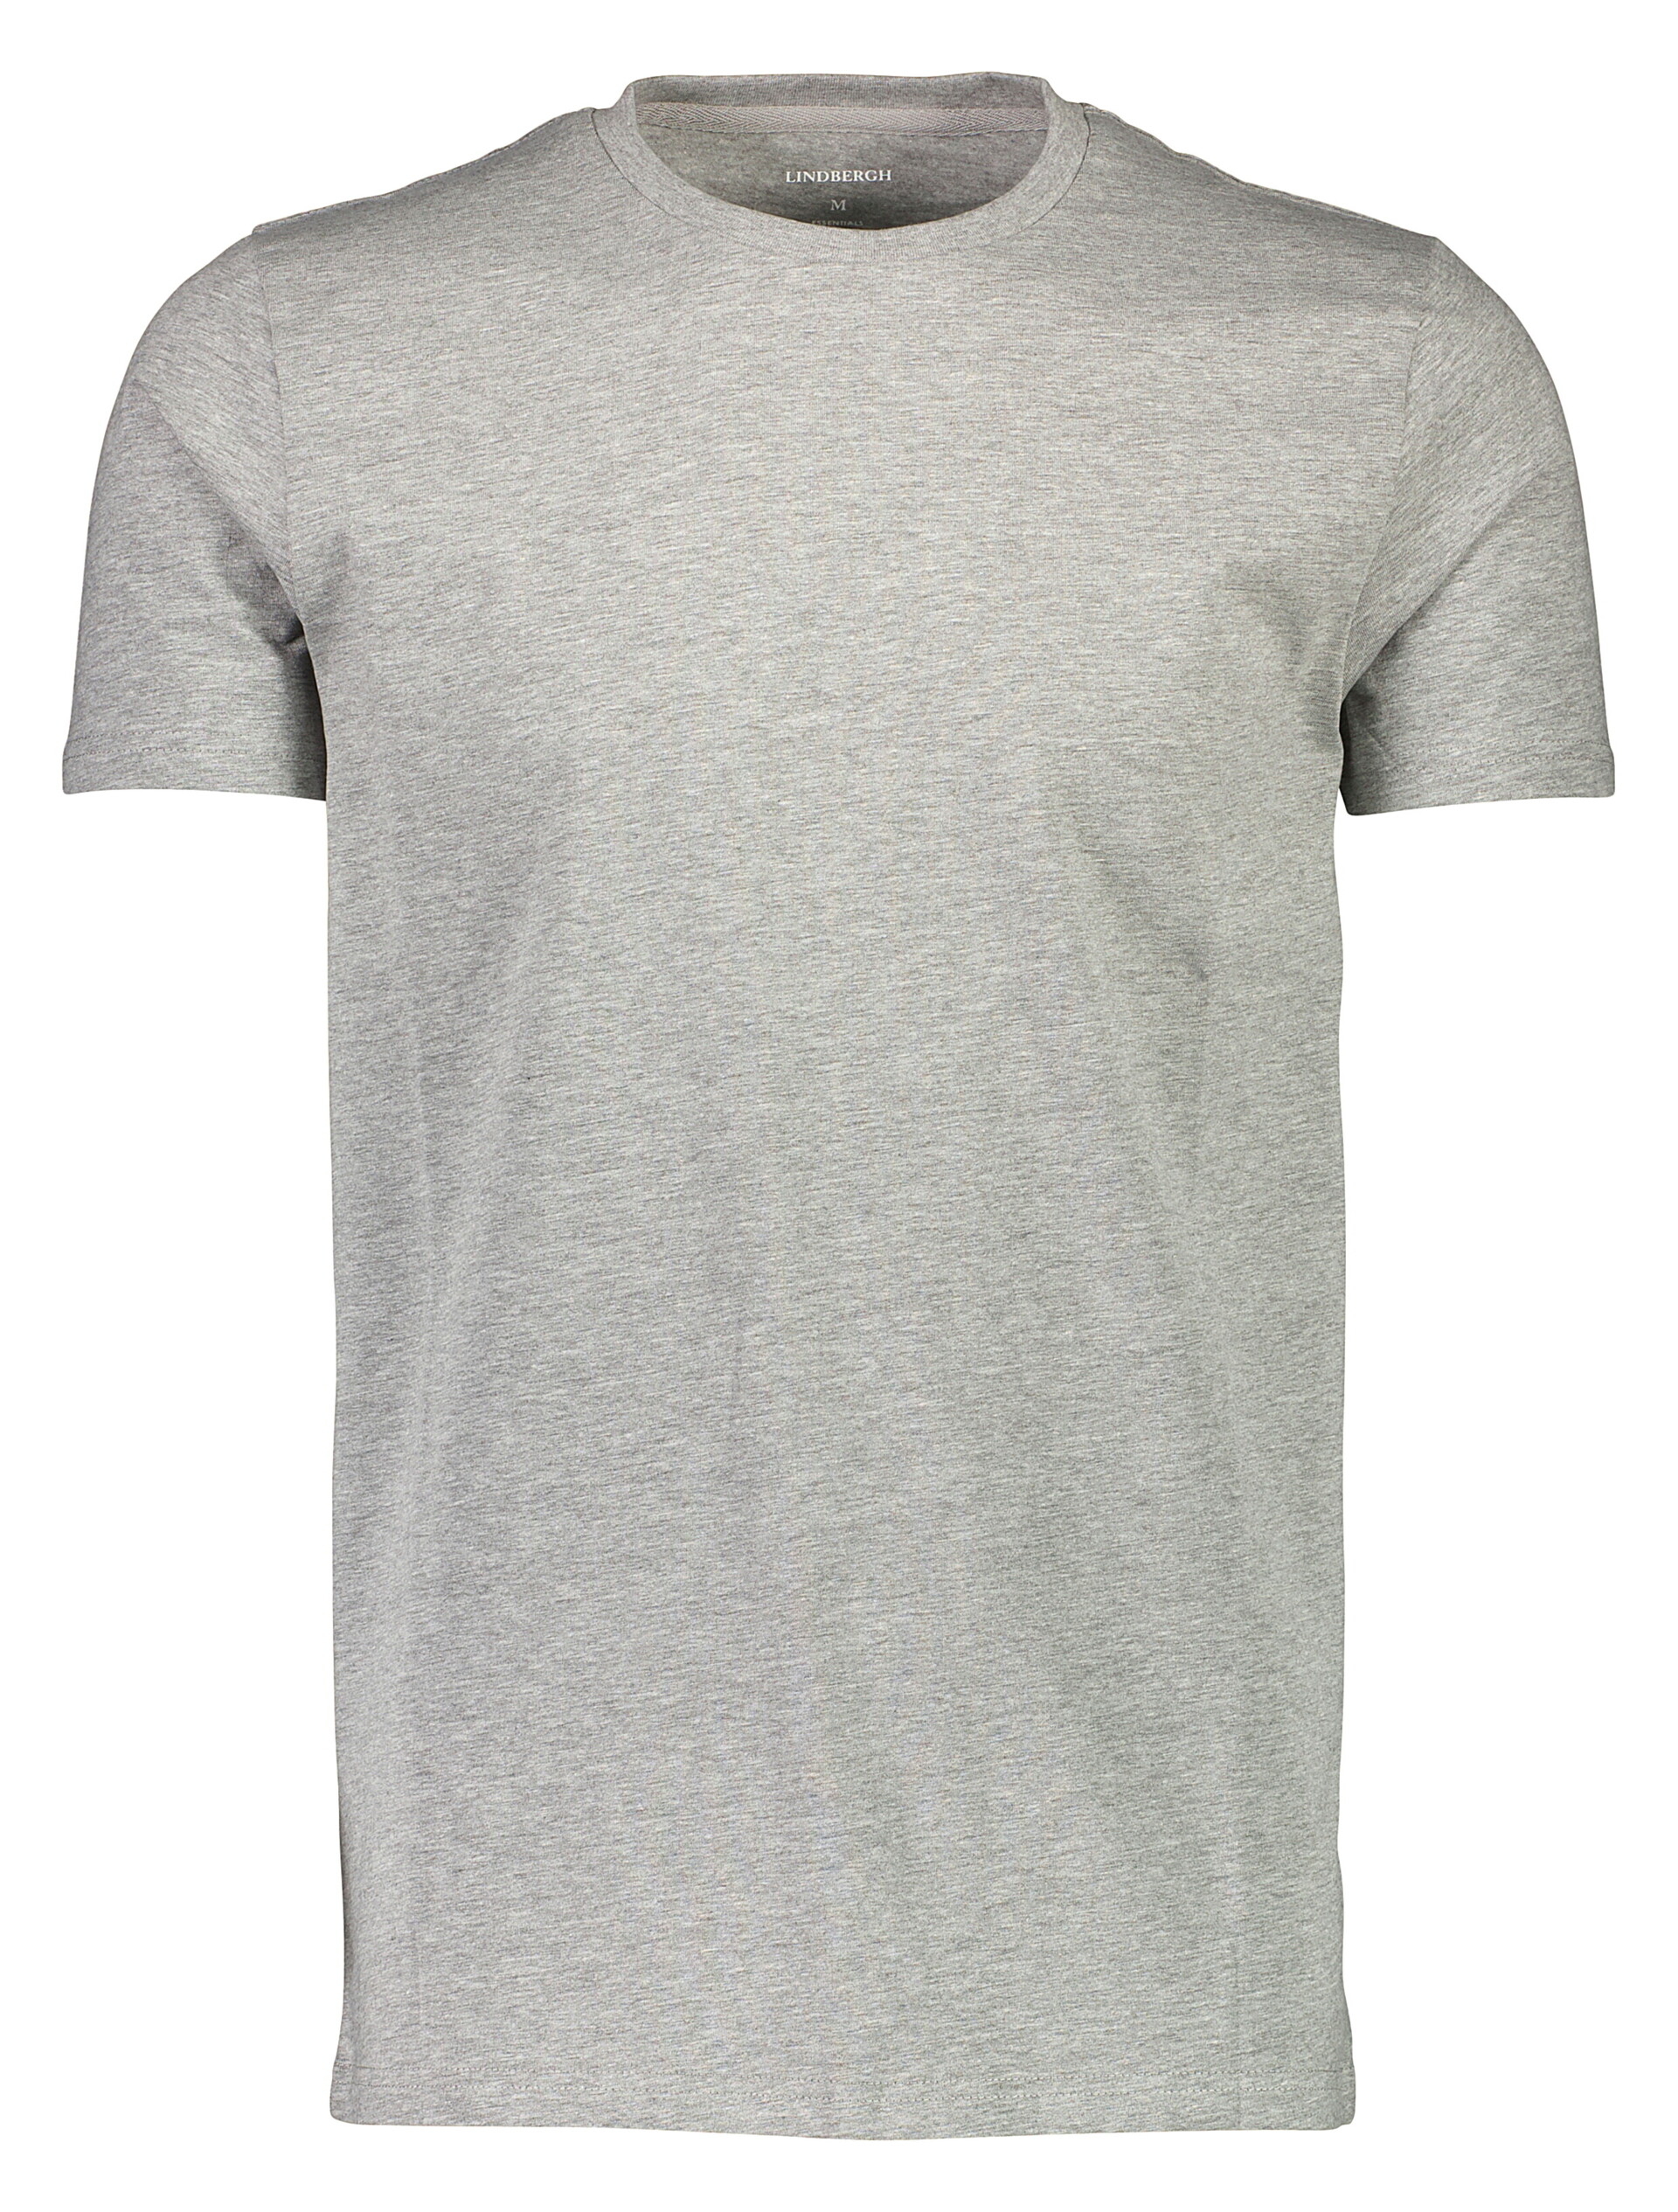 Lindbergh T-shirt grijs / grey mel